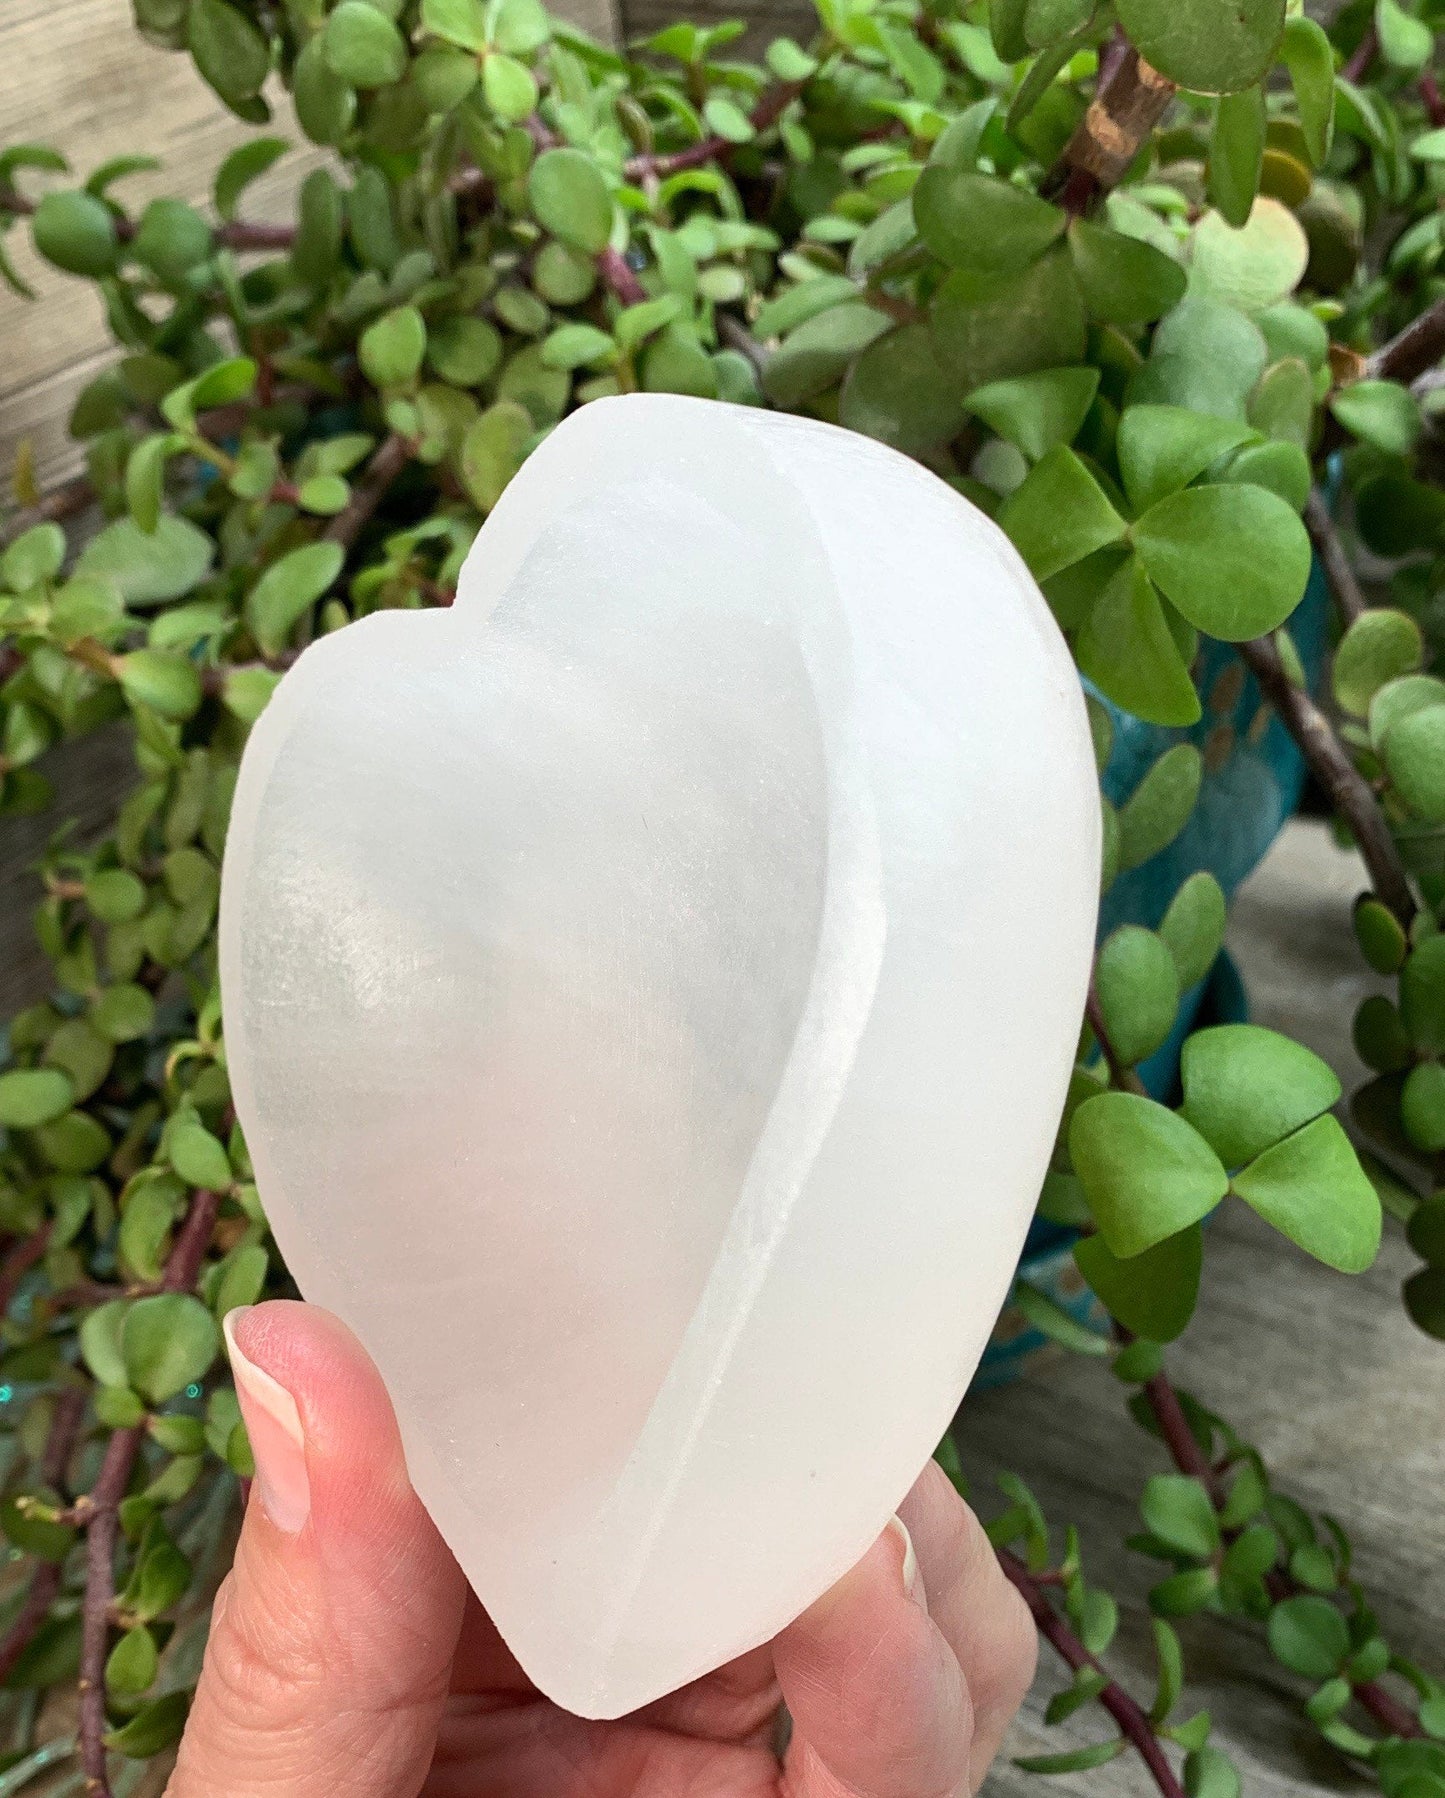 Selenite Heart Bowl Medium (Approx. 3 1/2") S-0060